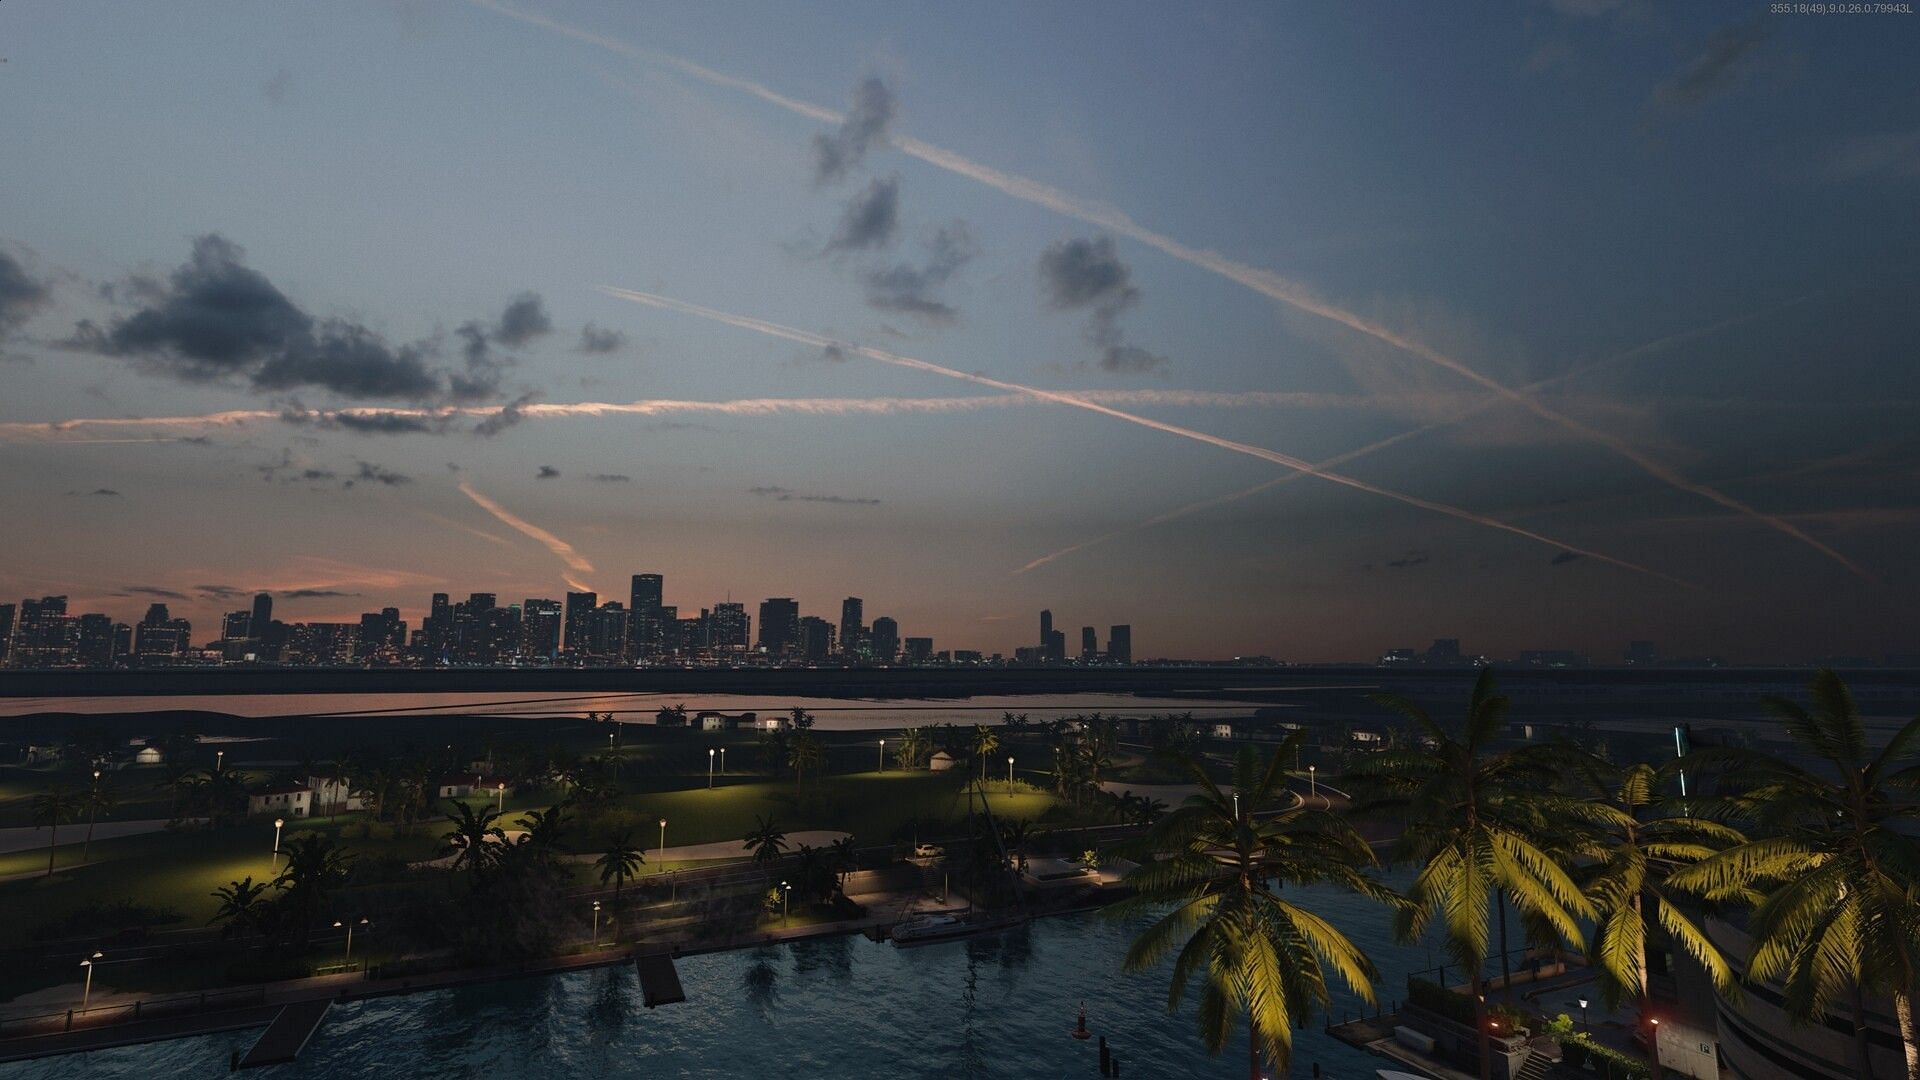 GTA 6 could be set in Vice City as per leaks (image via callofdutymaps.com)